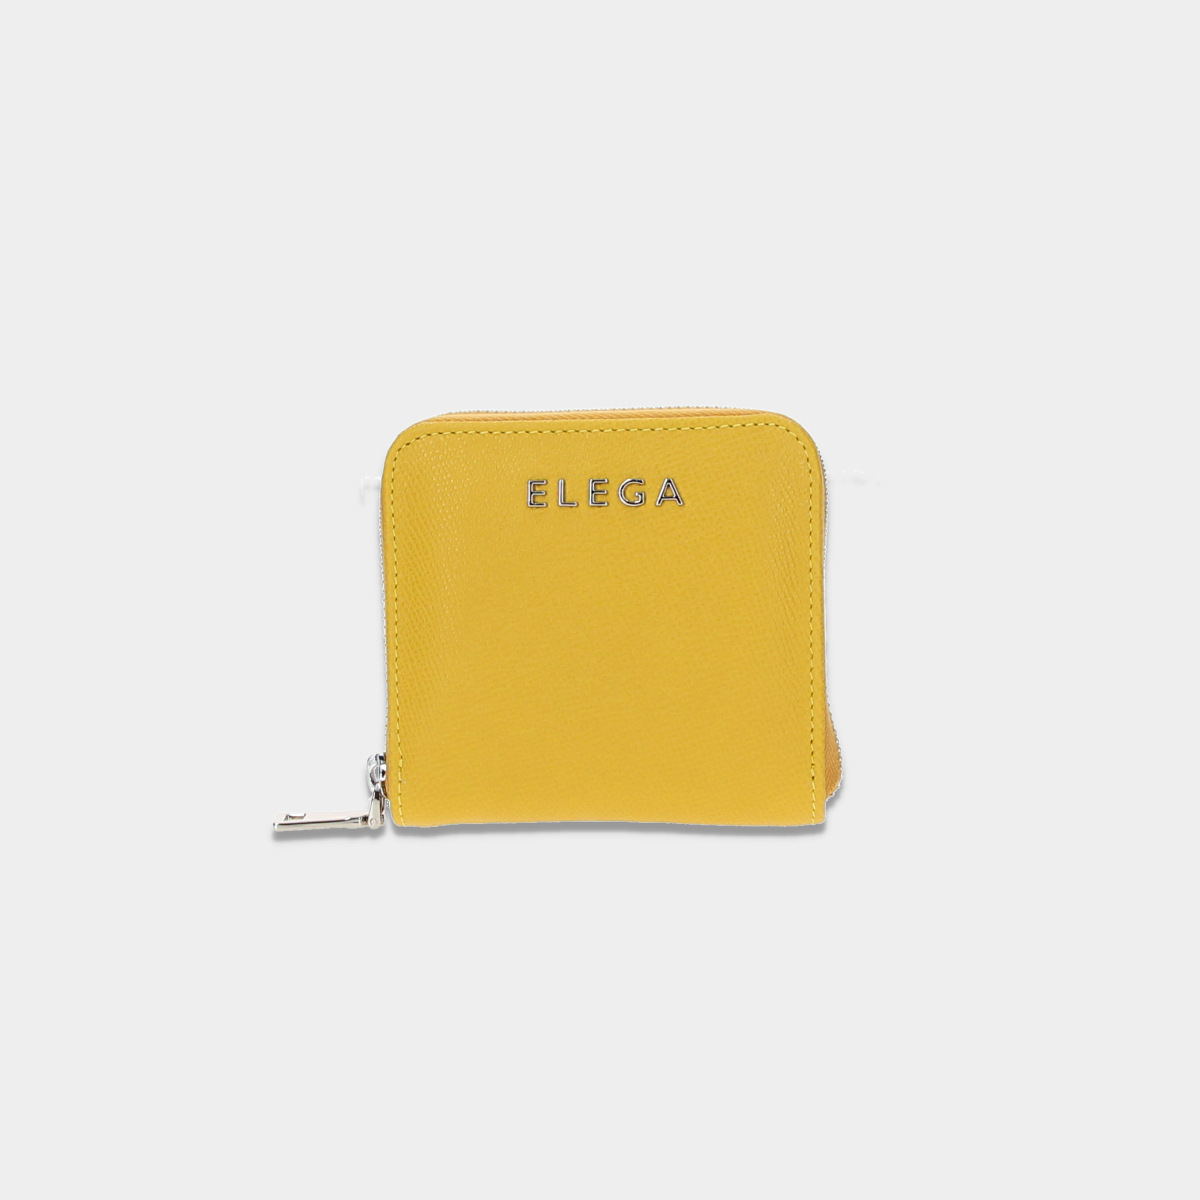 ELEGA Malá zipová peněženka ELEGA žlutá/stříbro